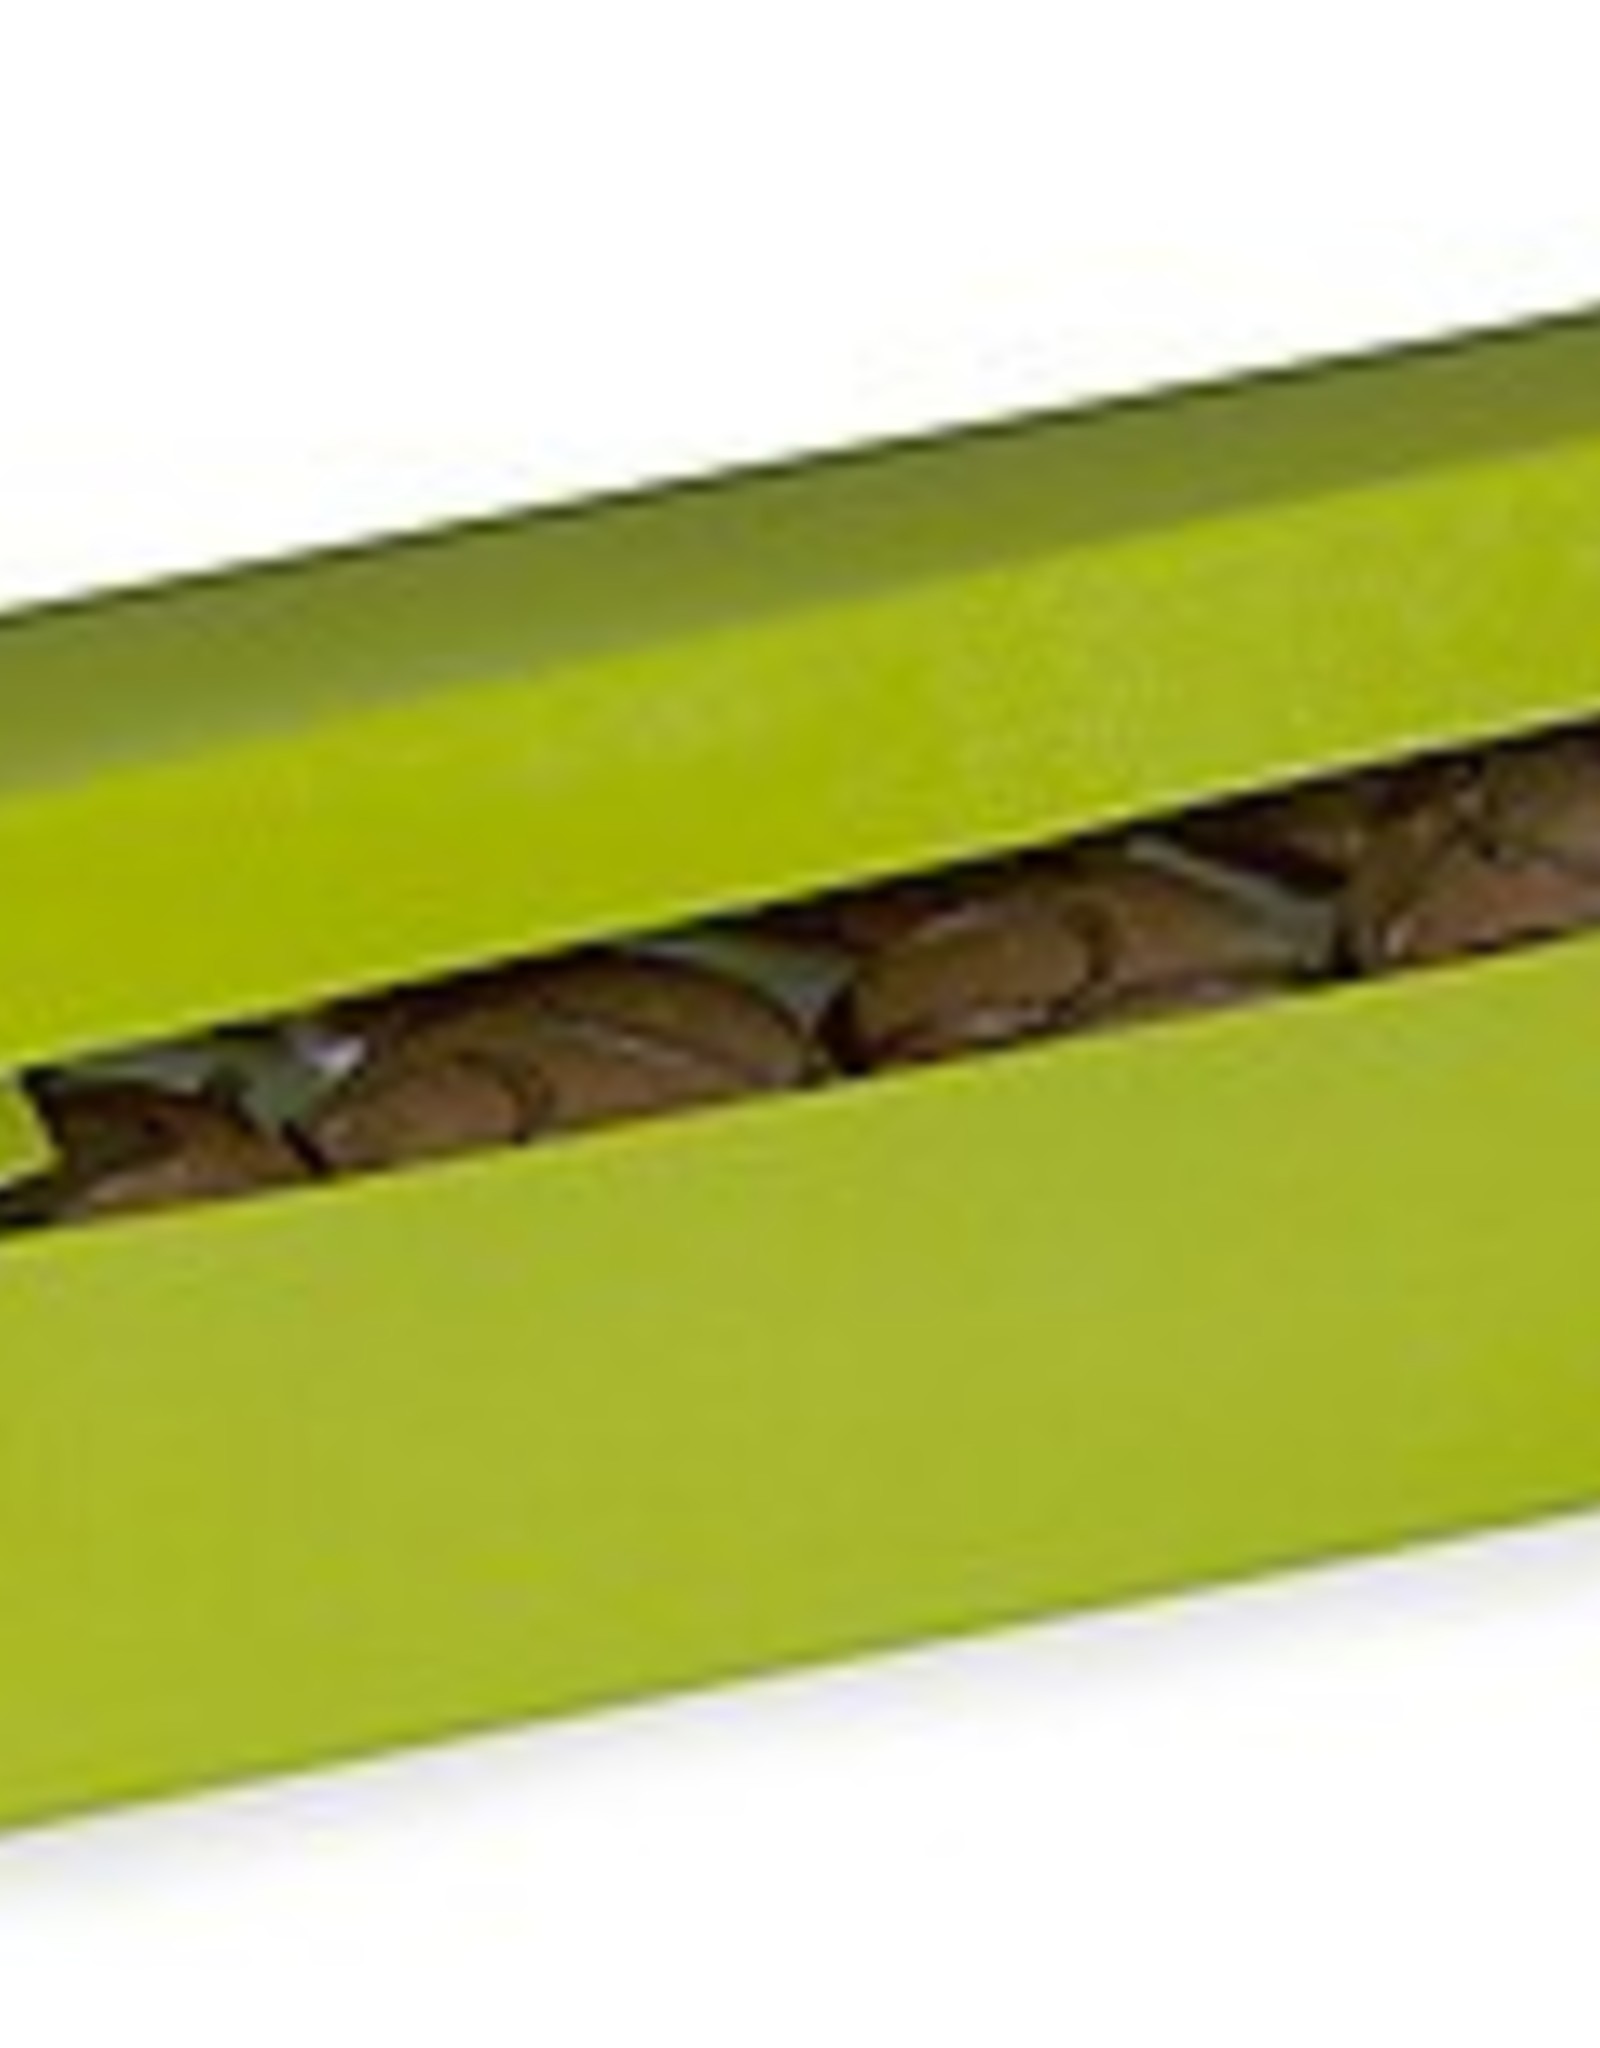 Candy Box (Lime Green) 1lb.